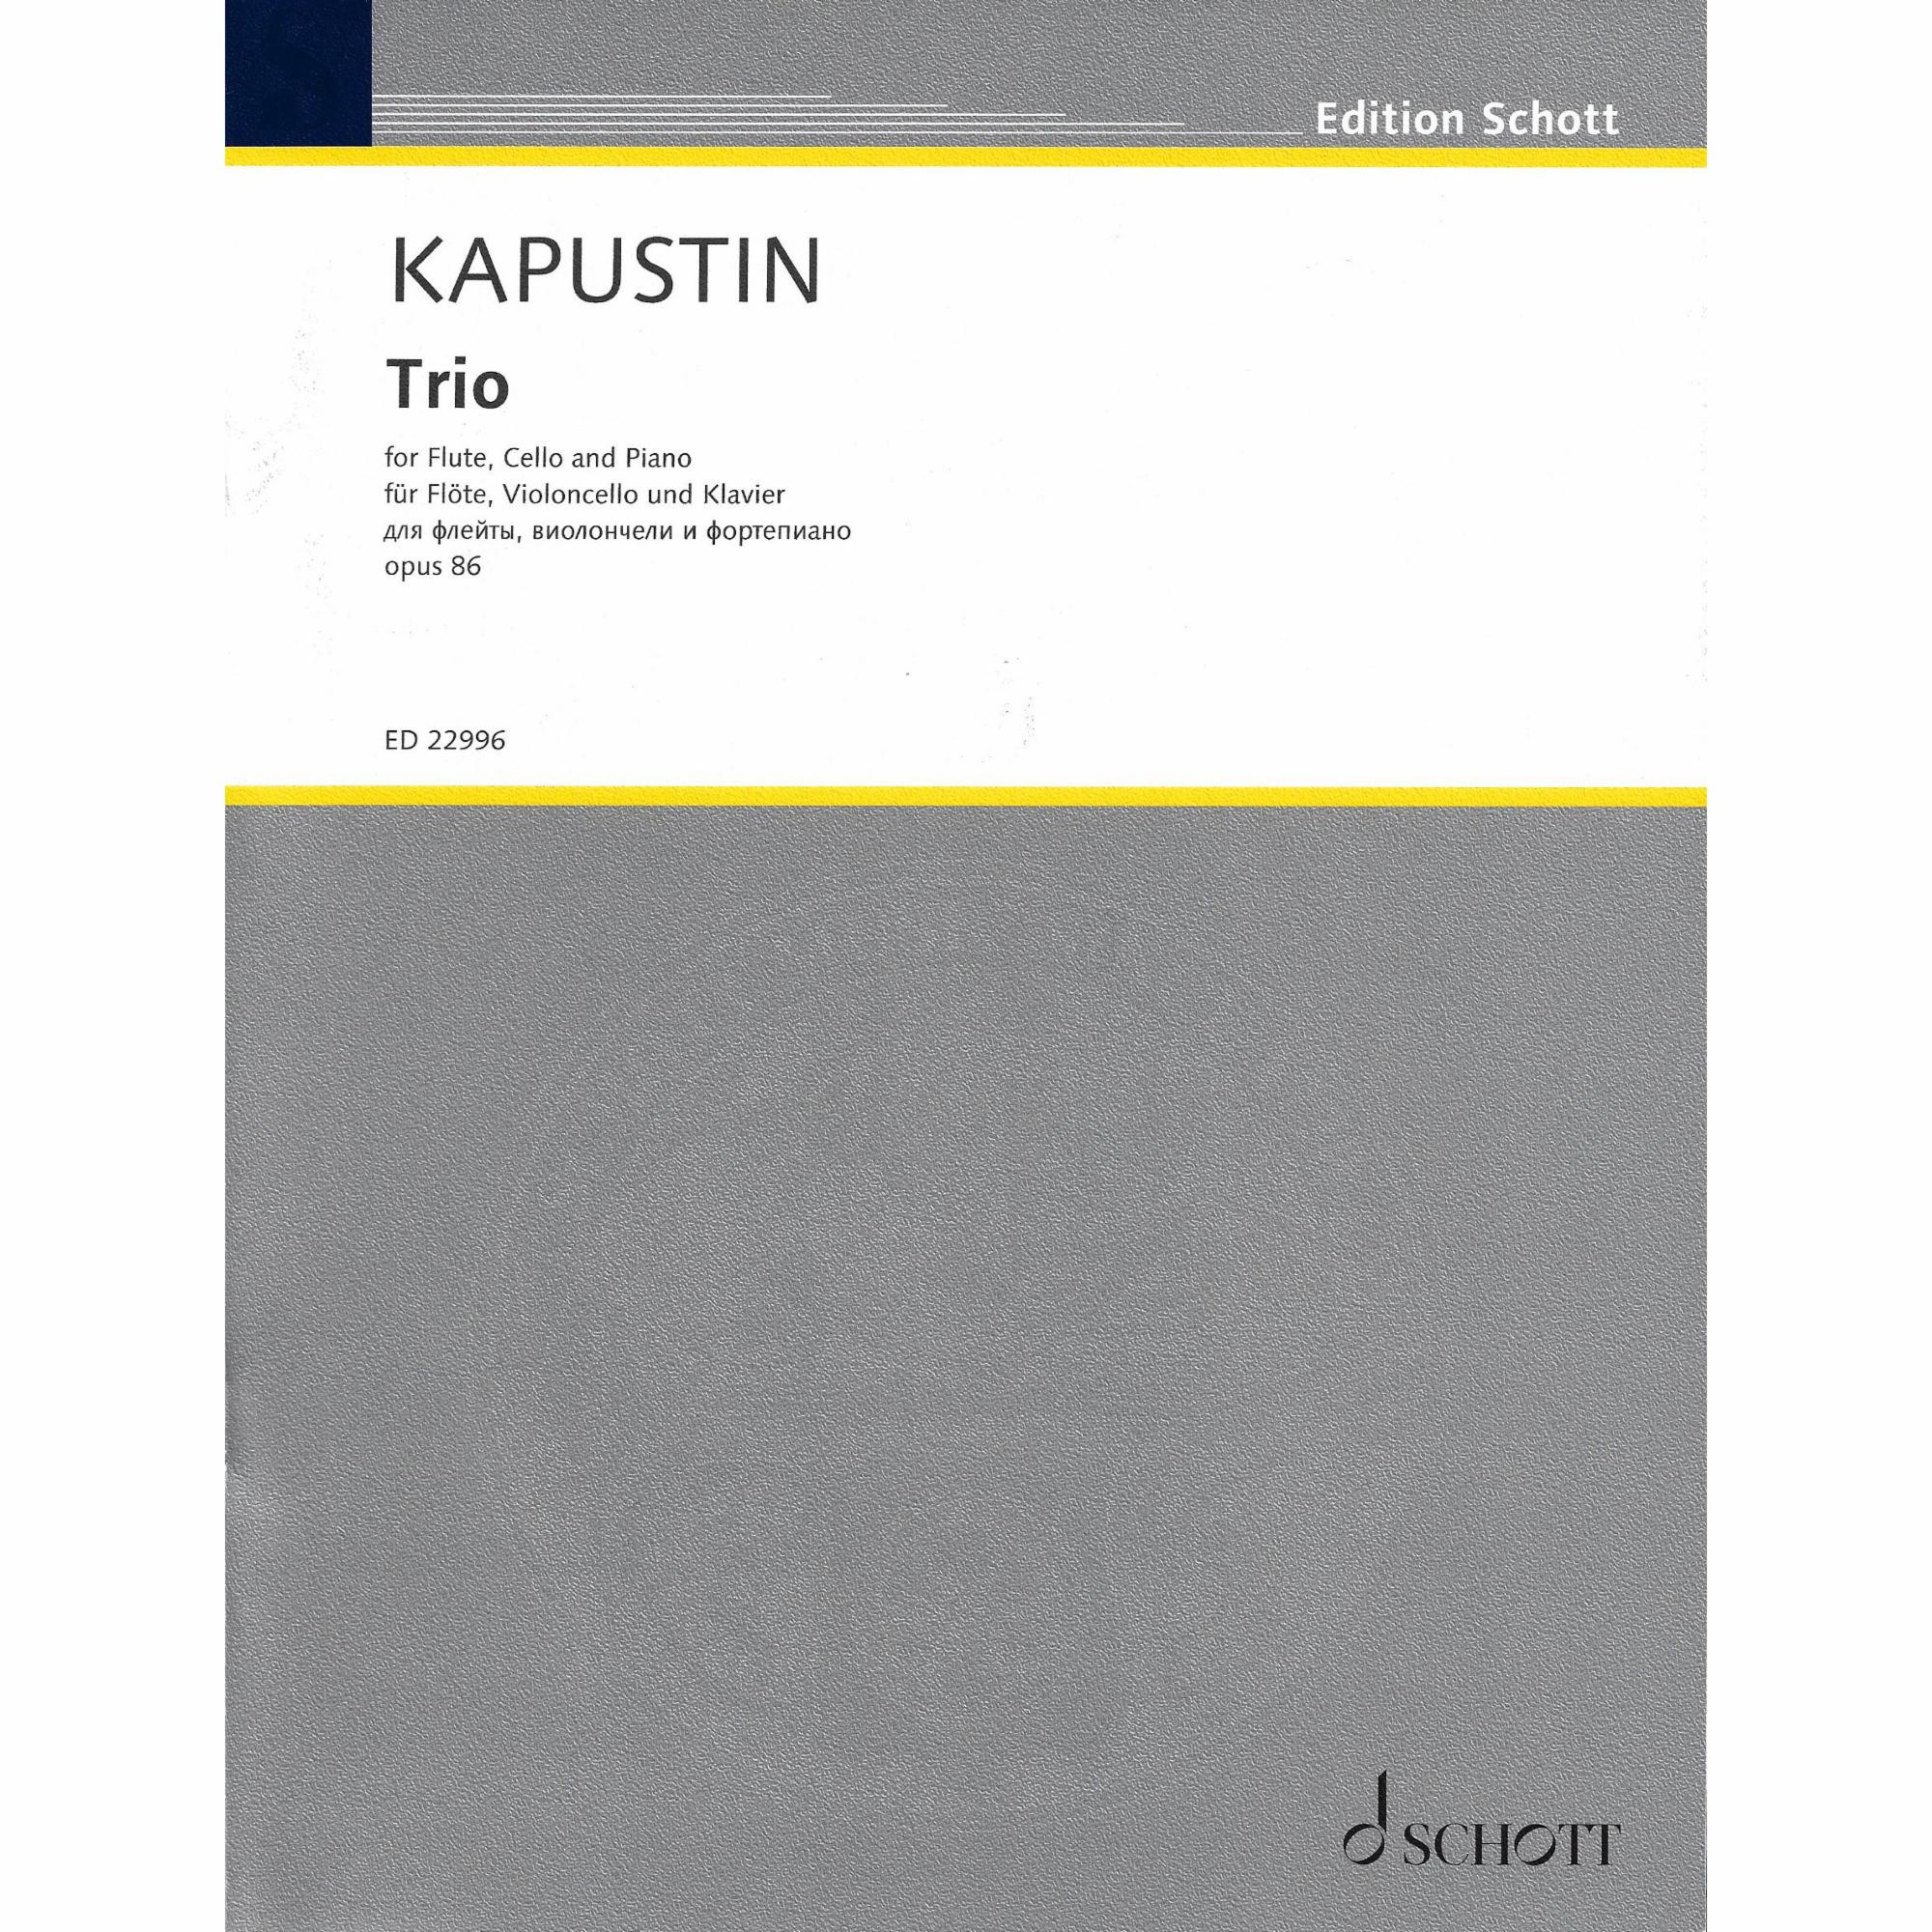 Kapustin -- Trio, Op. 86 for Flute, Cello and Piano